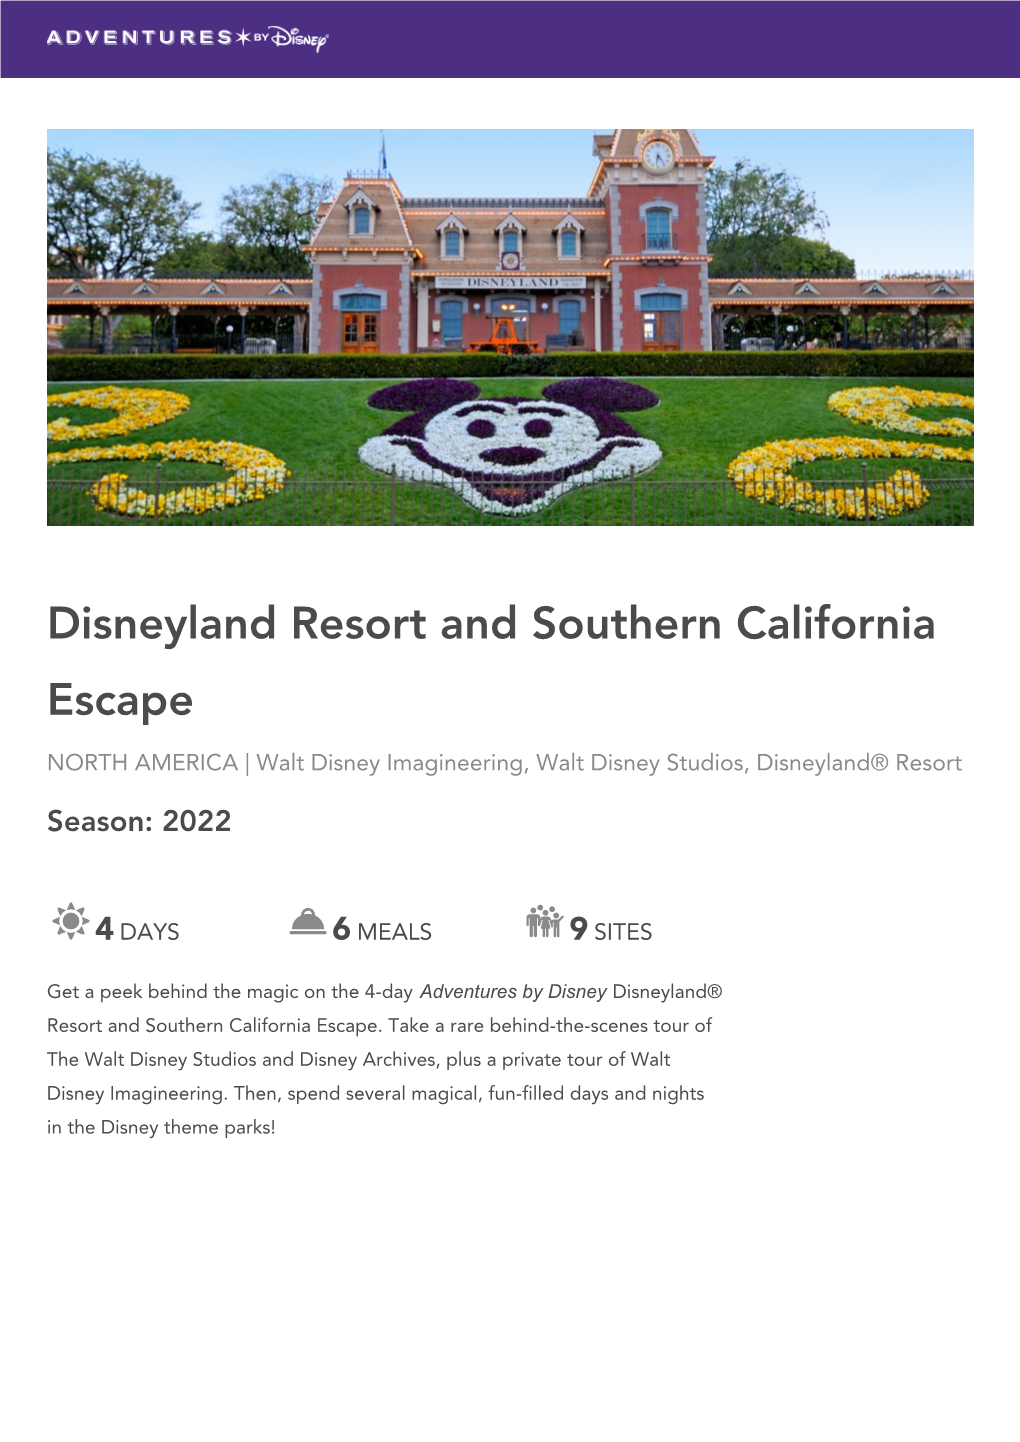 DISNEYLAND RESORT and SOUTHERN CALIFORNIA ESCAPE Walt Disney Imagineering, Walt Disney Studios, Disneyland® Resort